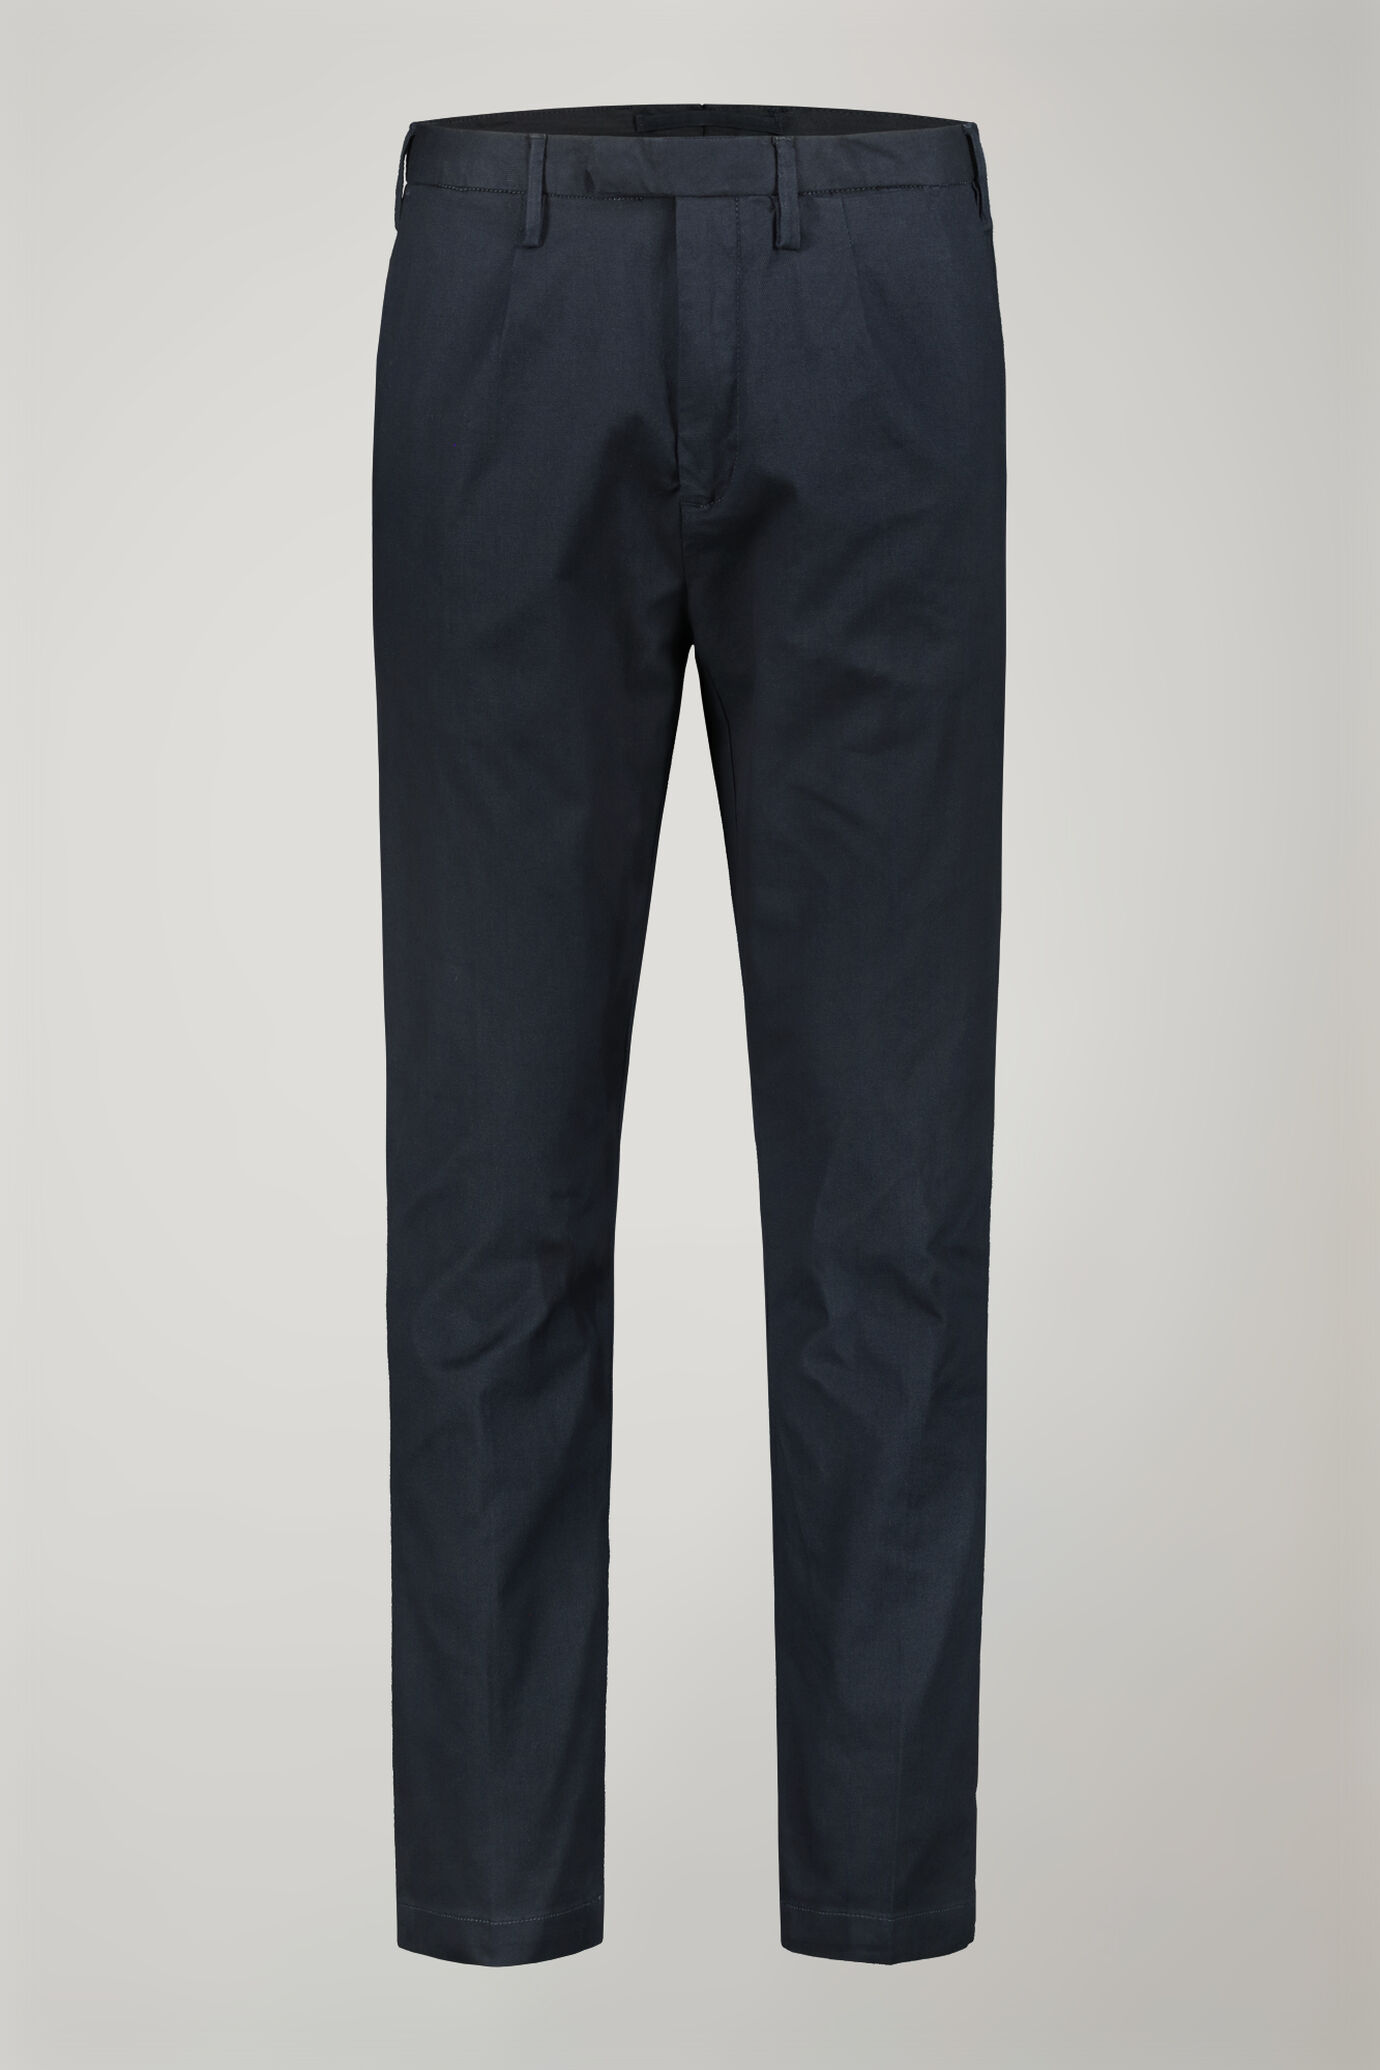 Pantalone uomo classico con pinces tessuto armaturato comfort fit image number 4